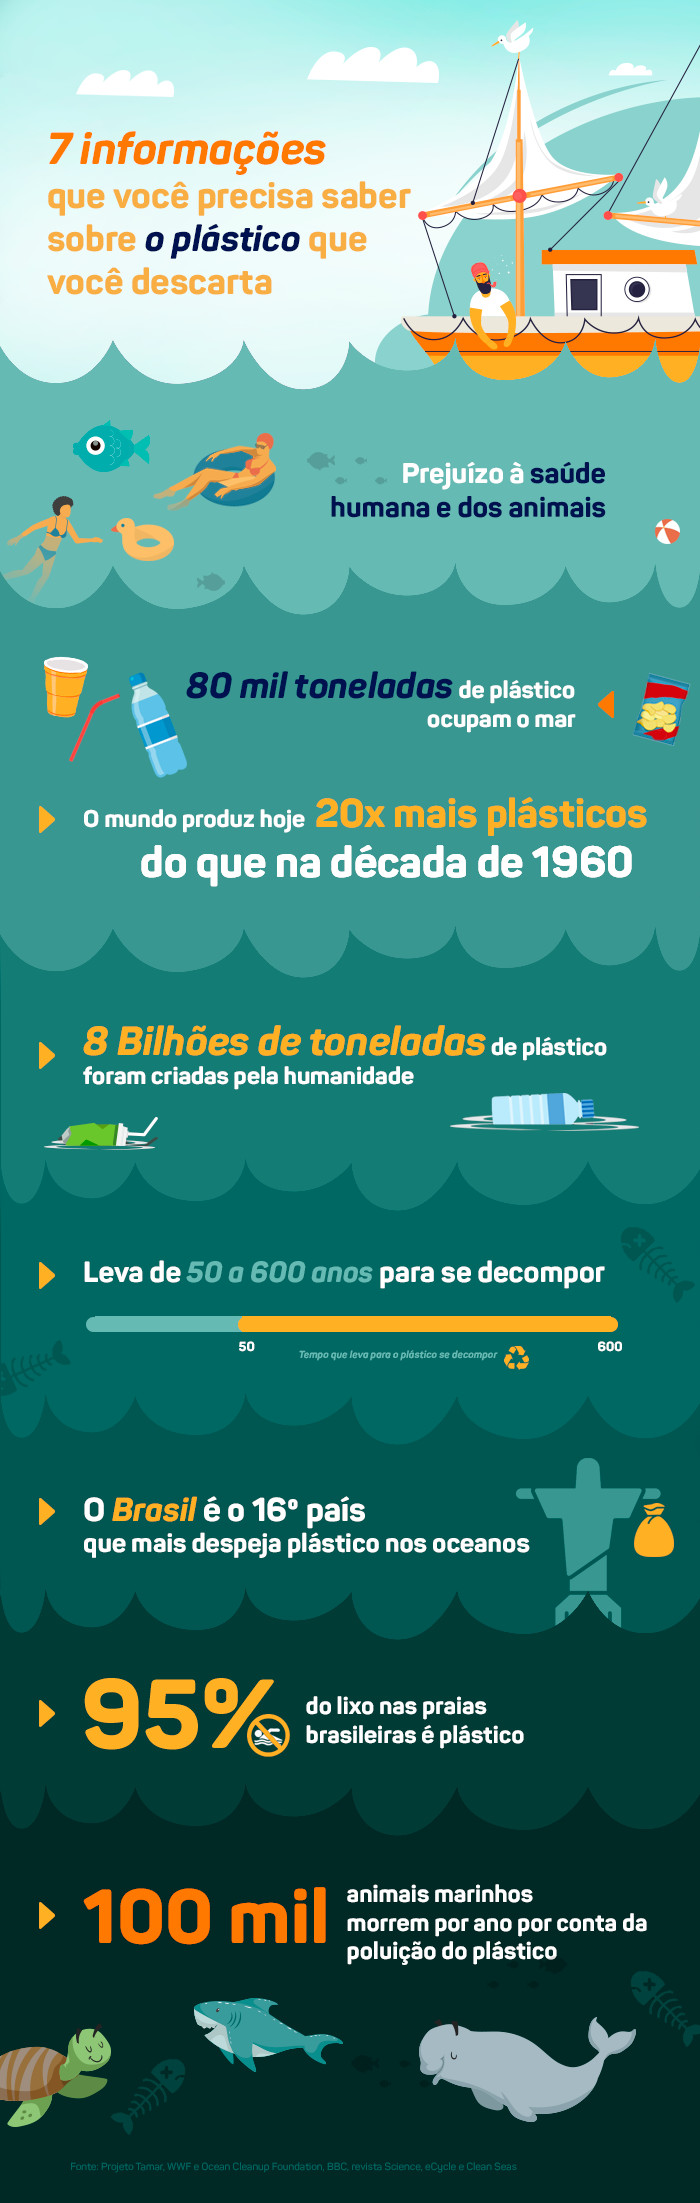 Entenda os impactos do plástico no meio ambiente